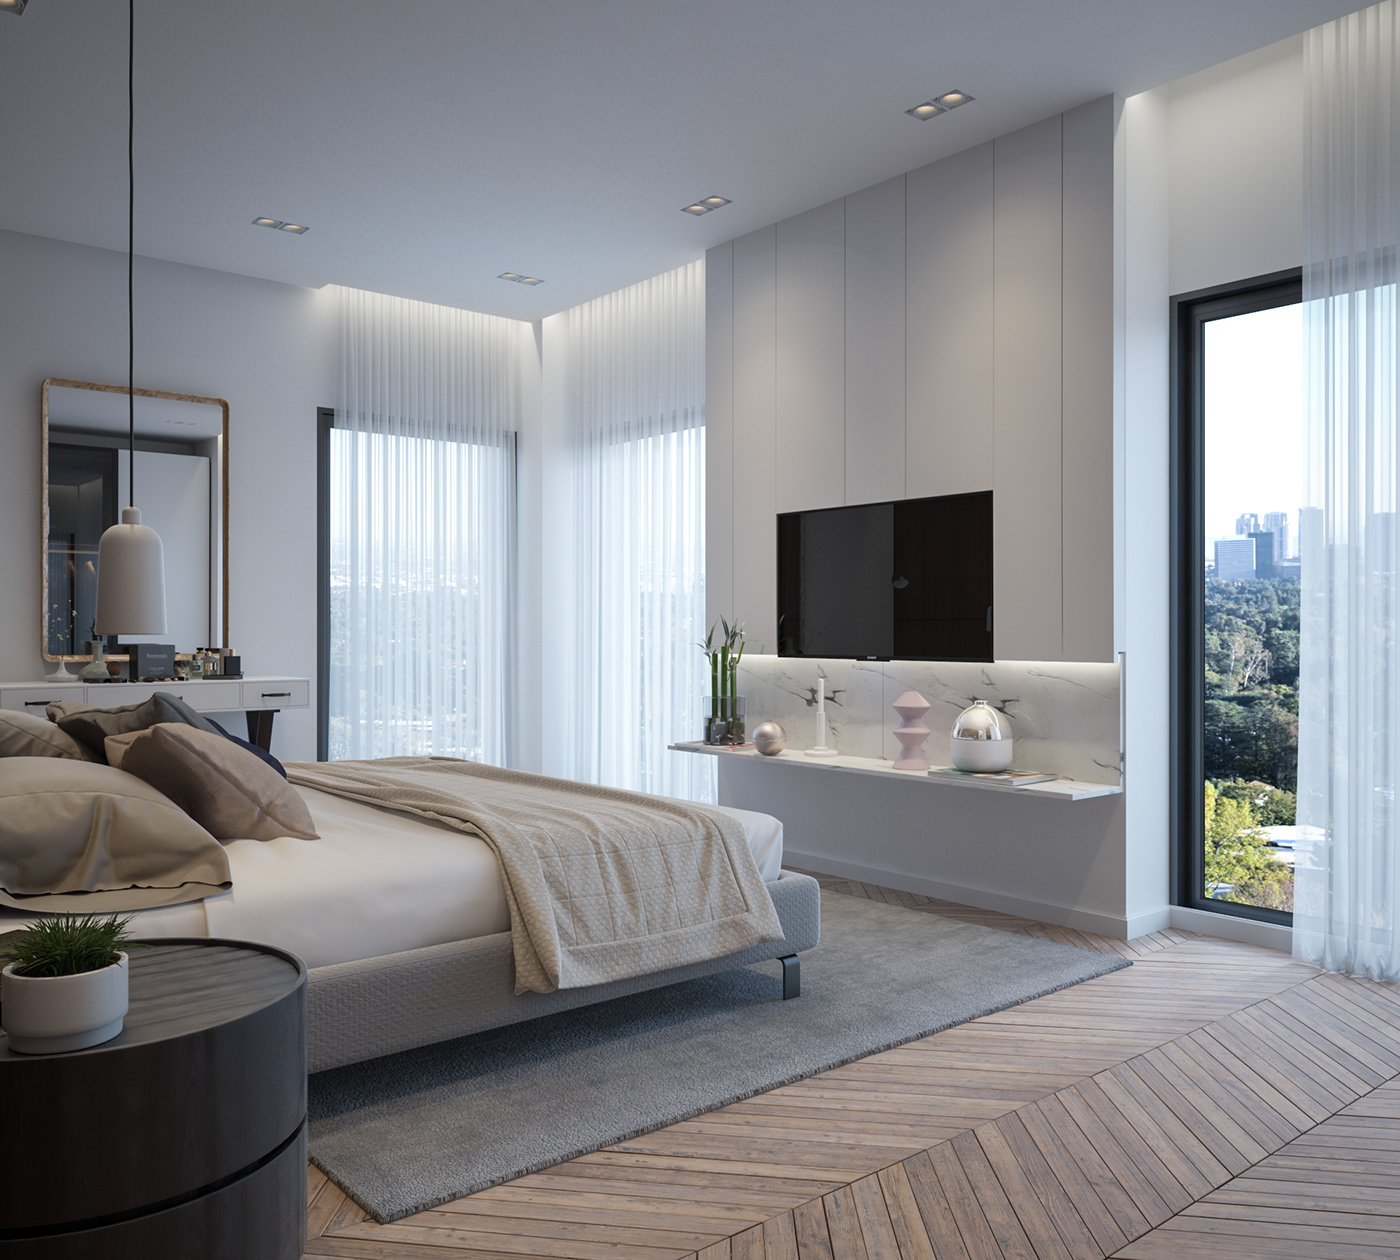 architecture bed bedroom furniture Interior interior design  modern White wood